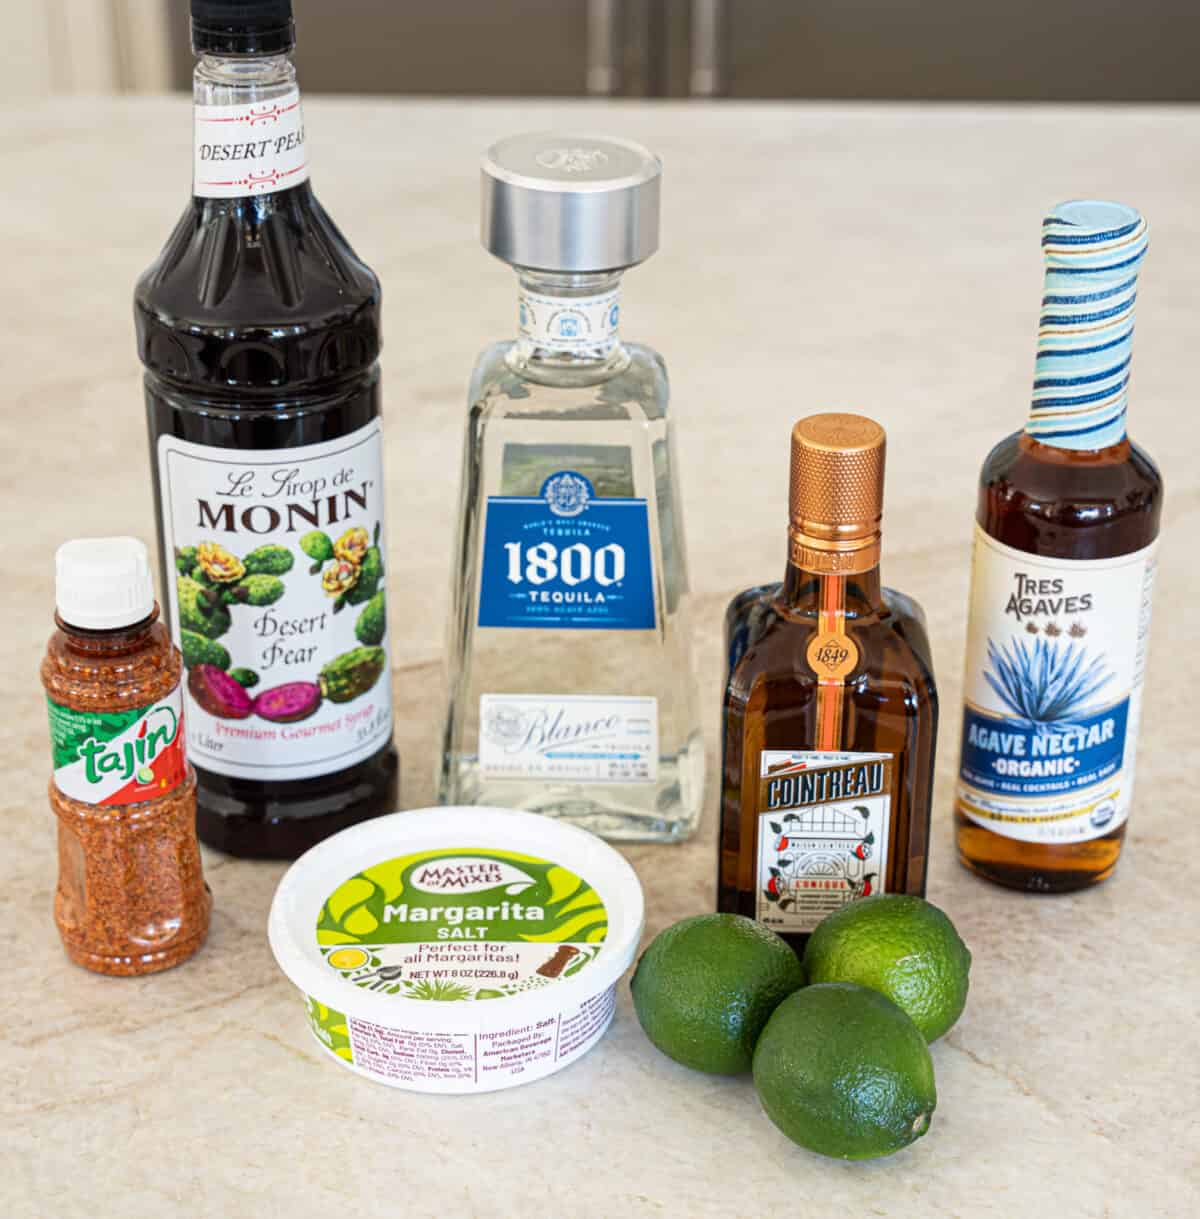 Prickly Pear Margarita ingredients including: Tajin, Desert pear syrup, Tequila, Margarita salt, Cointreau, Agave Nectar, Limes